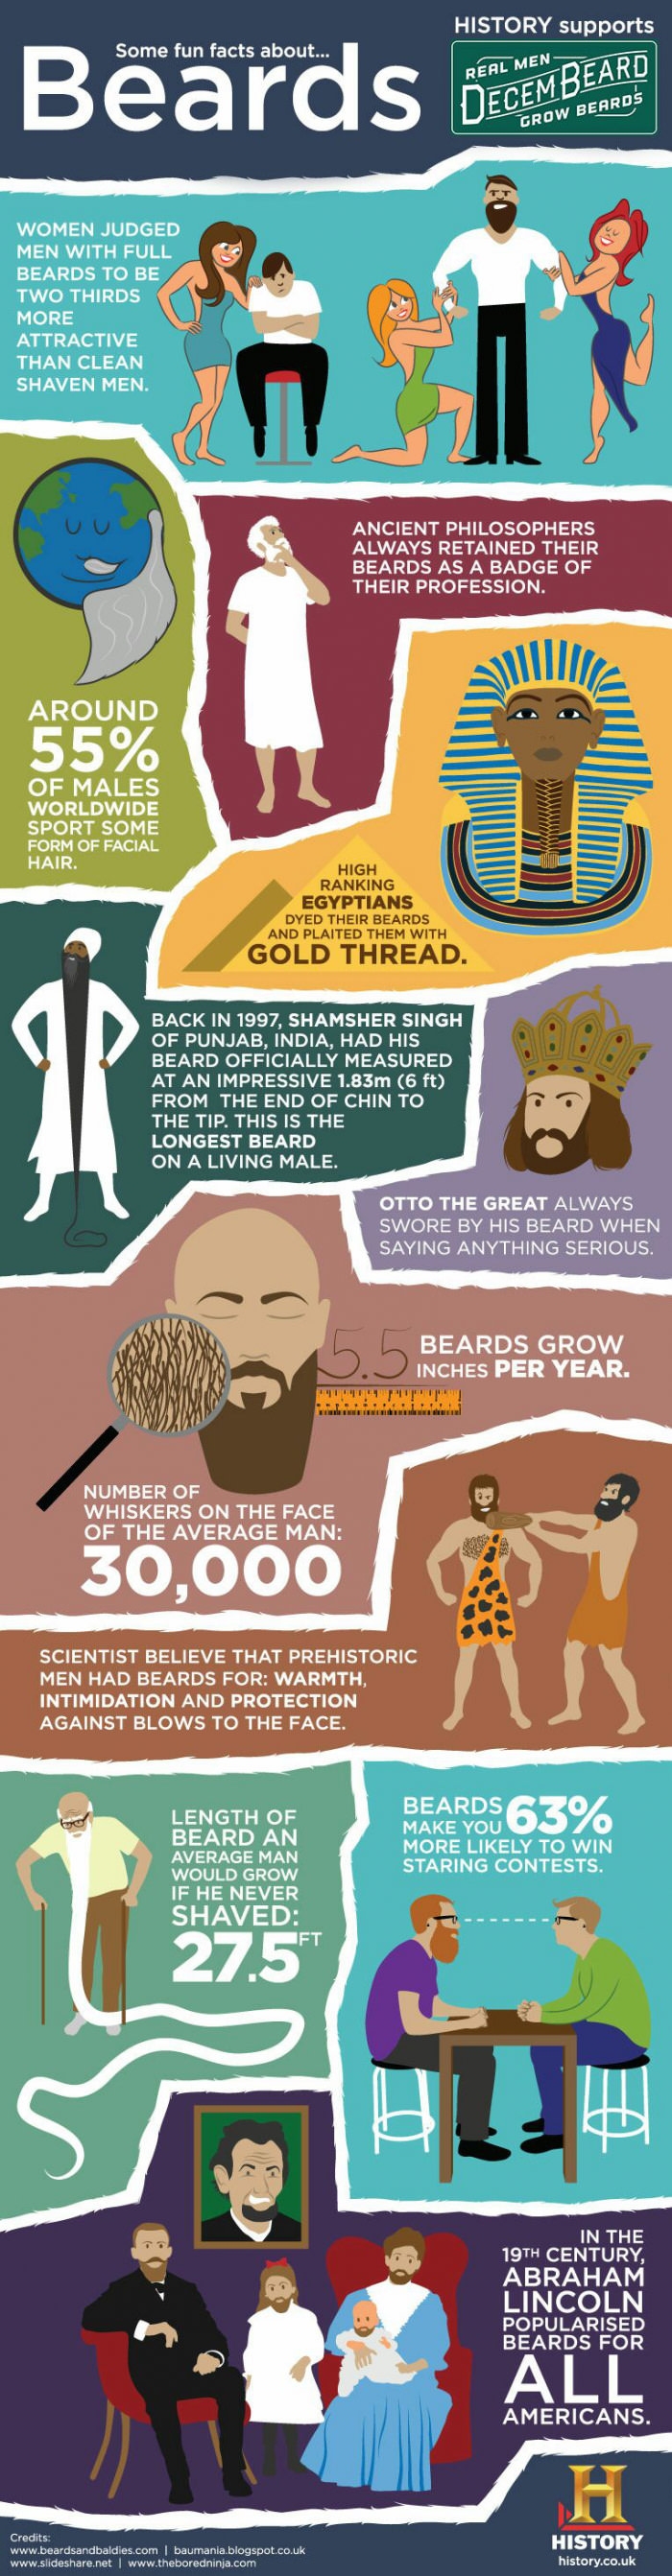 Beard facts